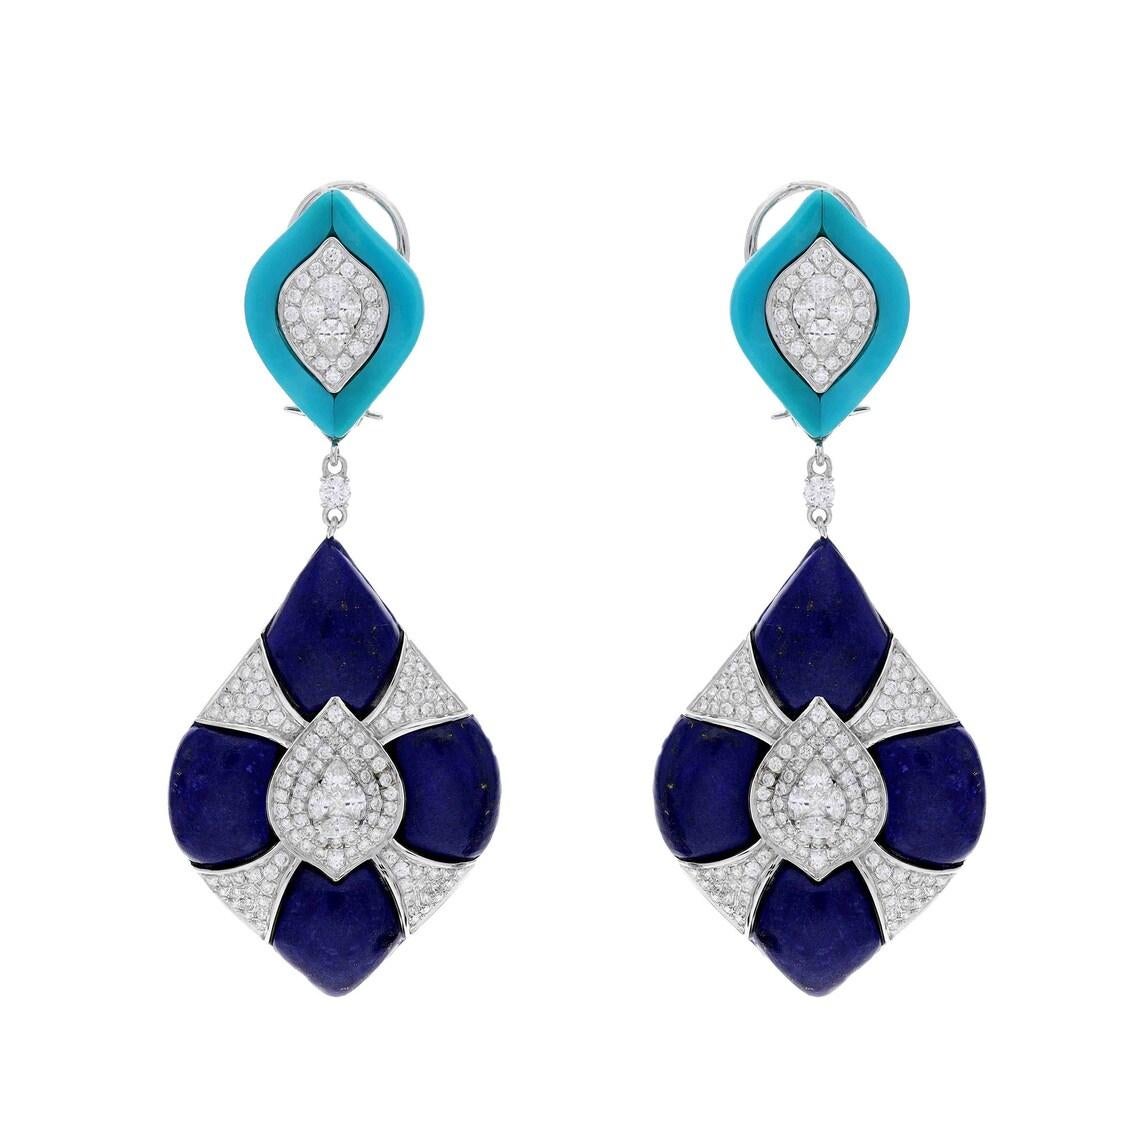 Mixed Cut Meghna Jewels 32.20 carat Lapis 4.60 carat Turquoise Diamond 18K Gold Earrings For Sale